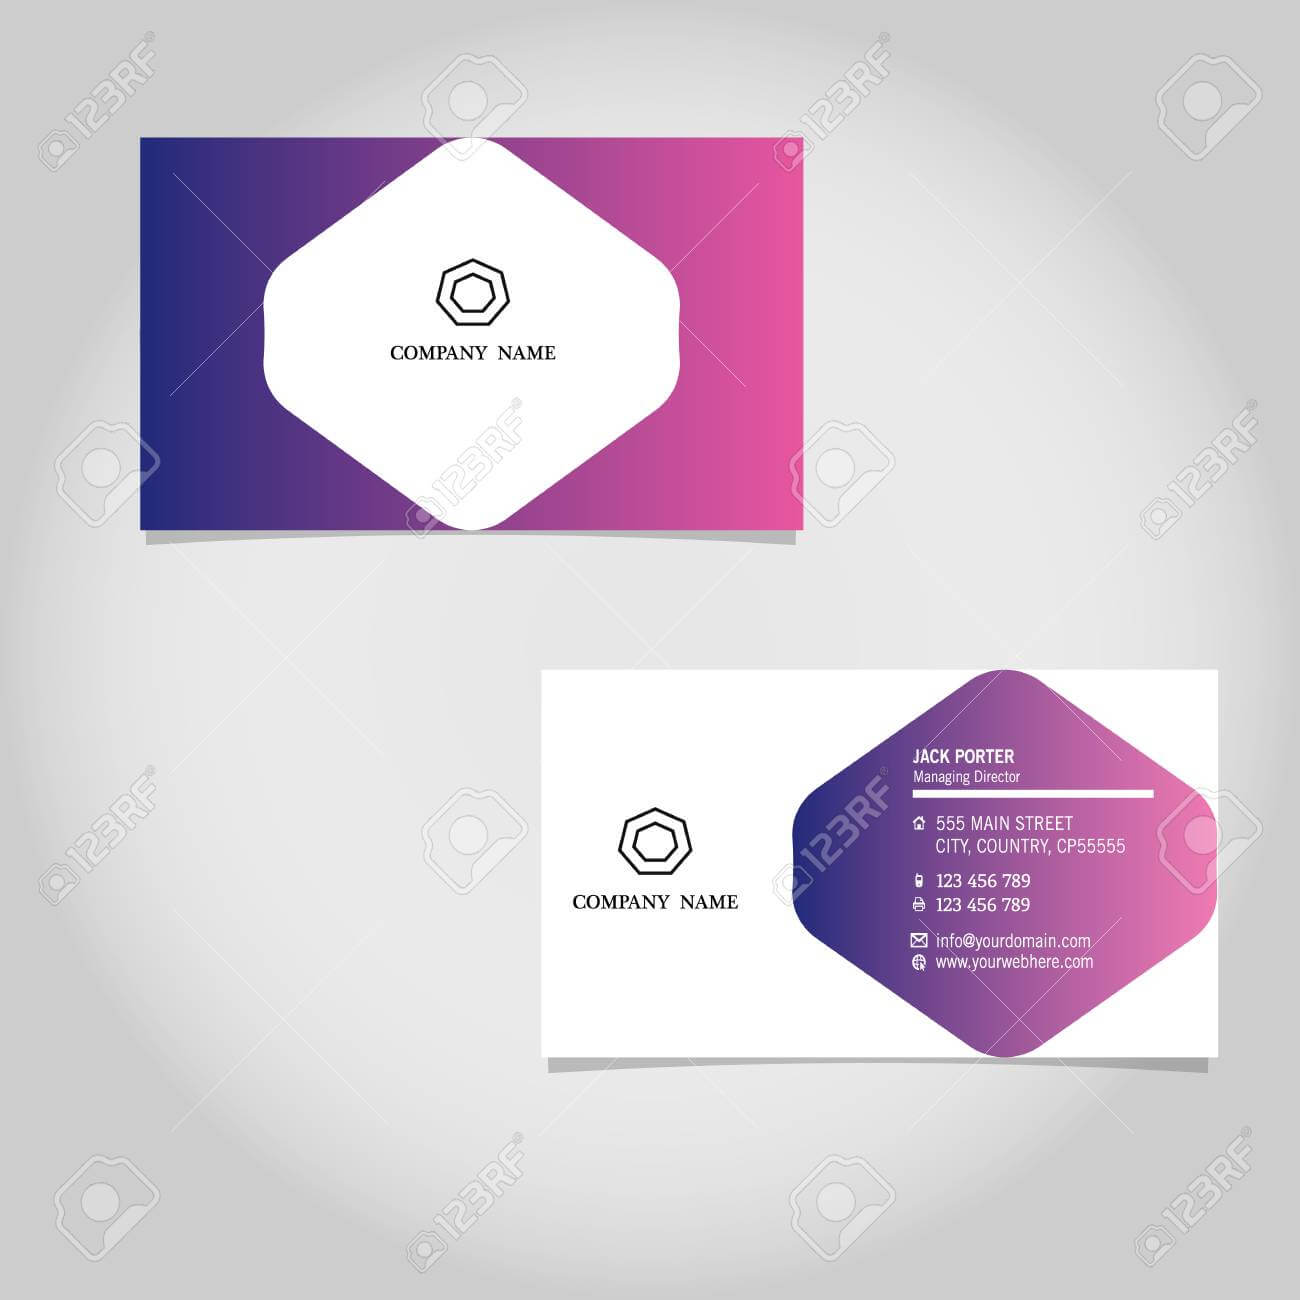 Vector Business Card Template Design Adobe Illustrator Intended For Adobe Illustrator Card Template